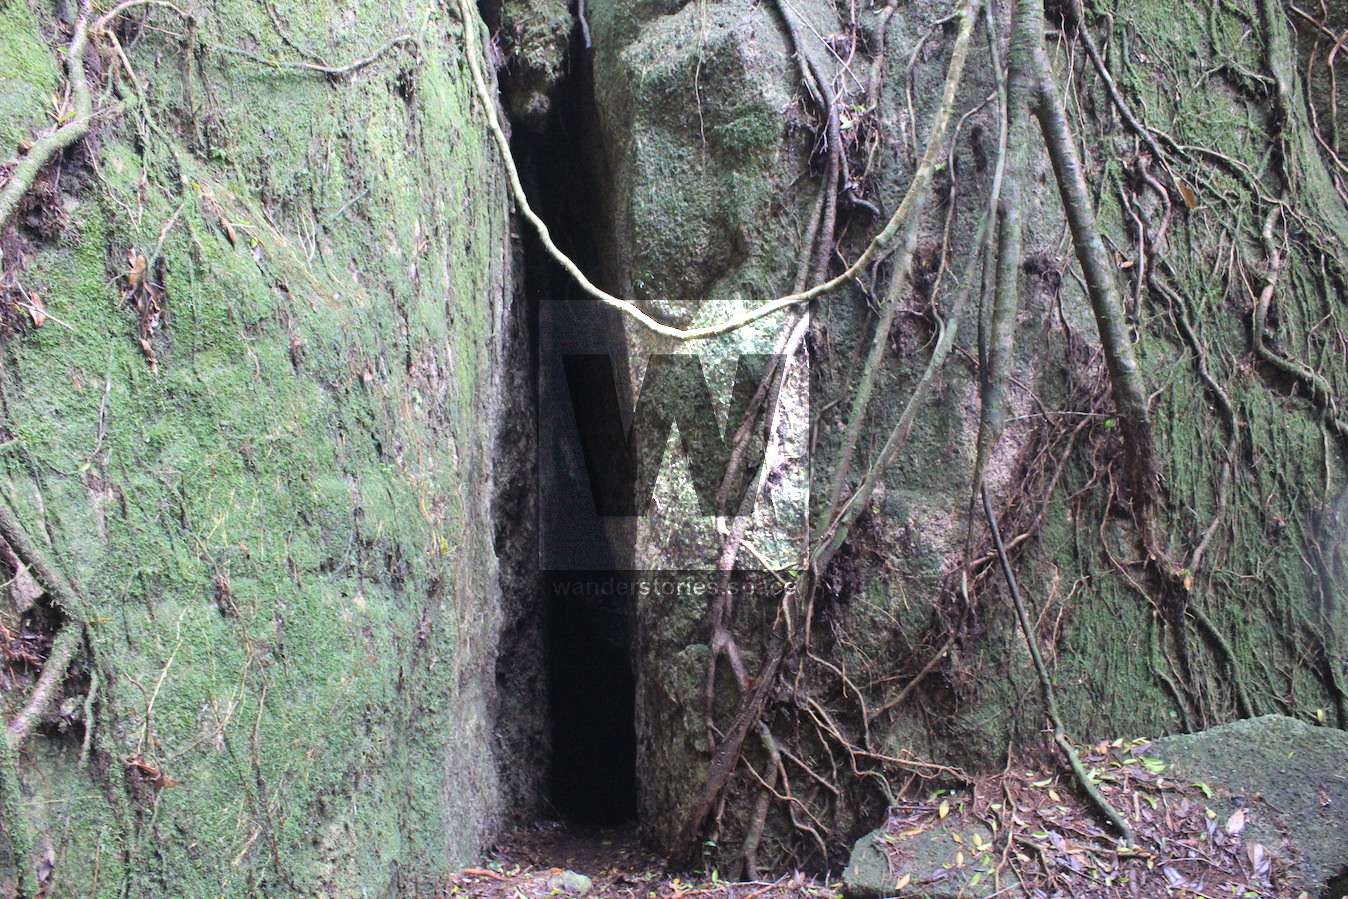 The bat cave entrance at Torsten's Rock Garden